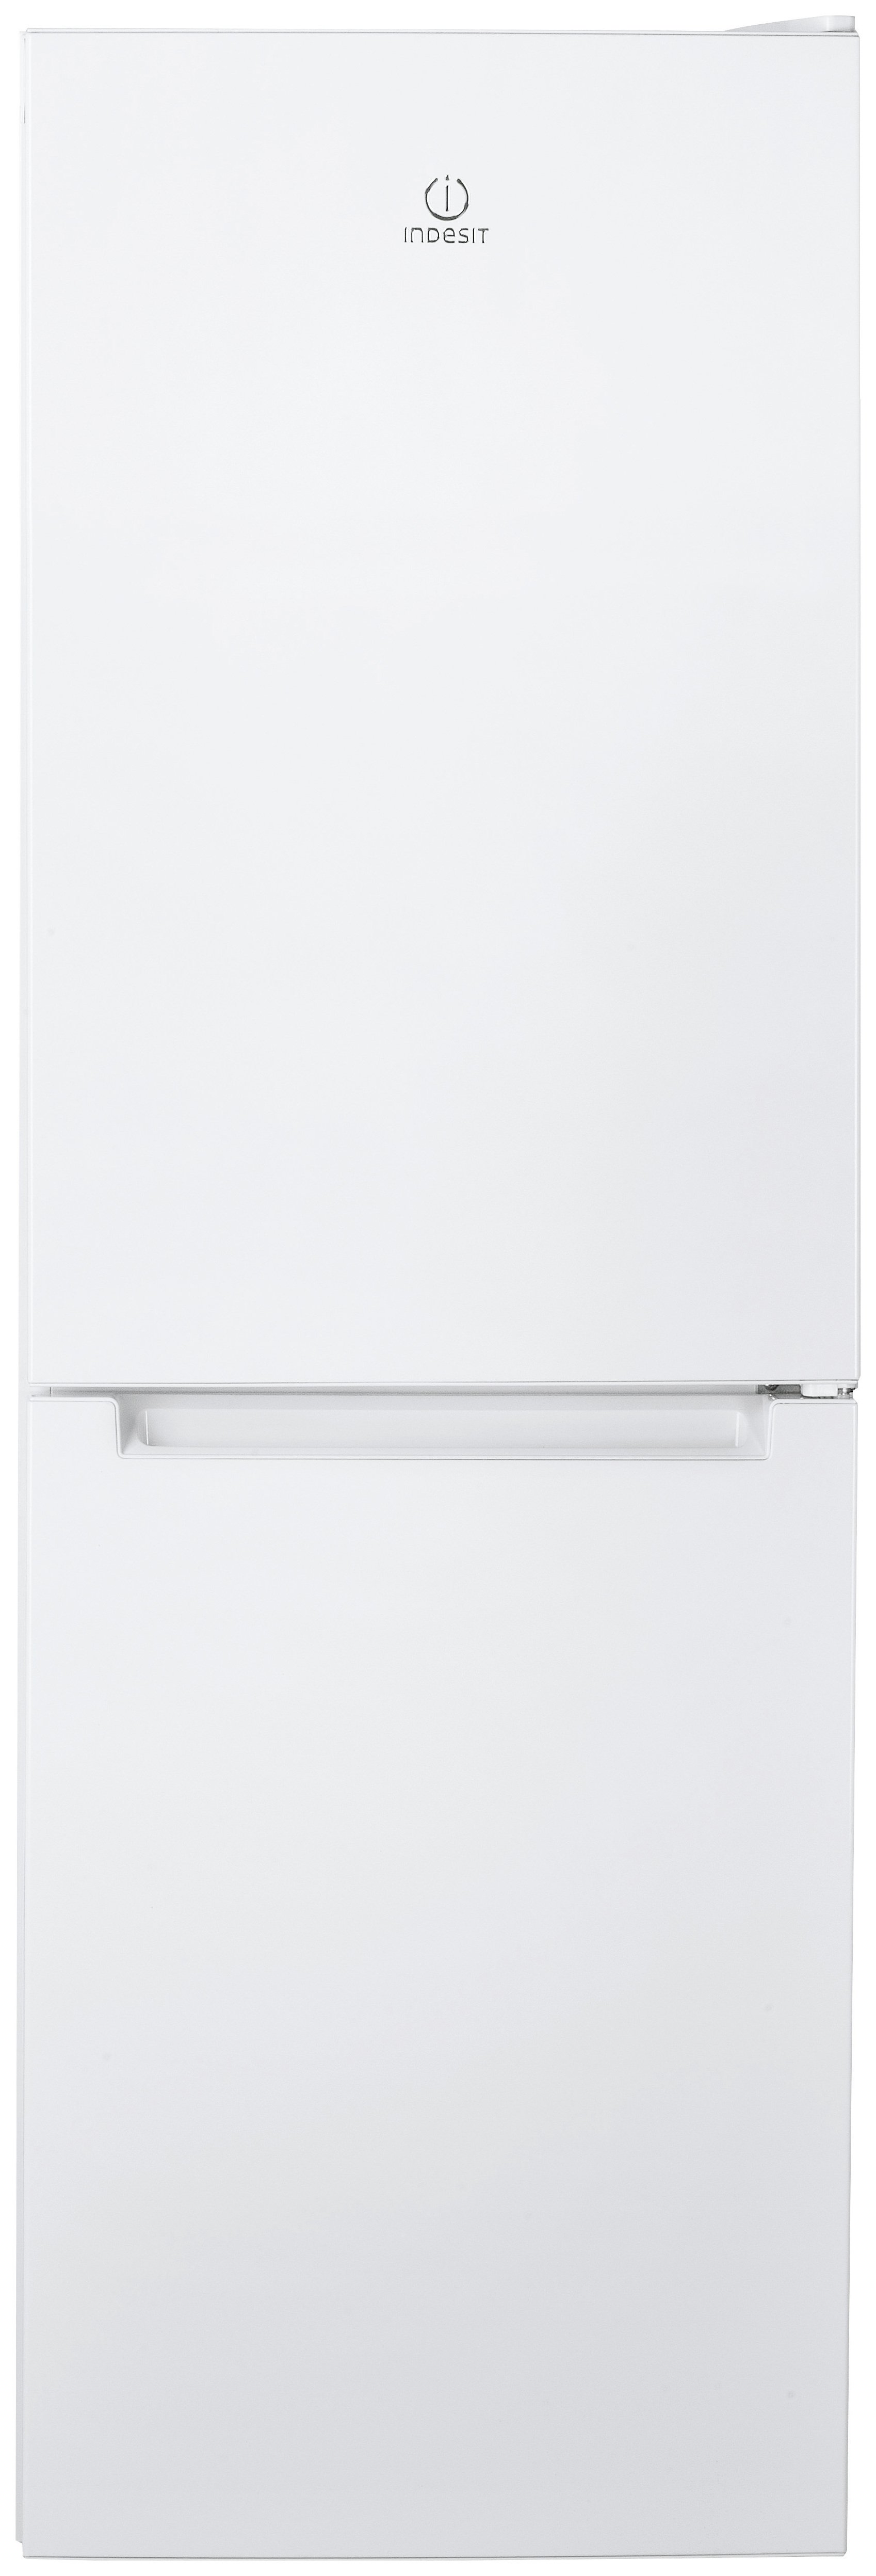 Indesit LR7S1W Fridge Freezer - White.